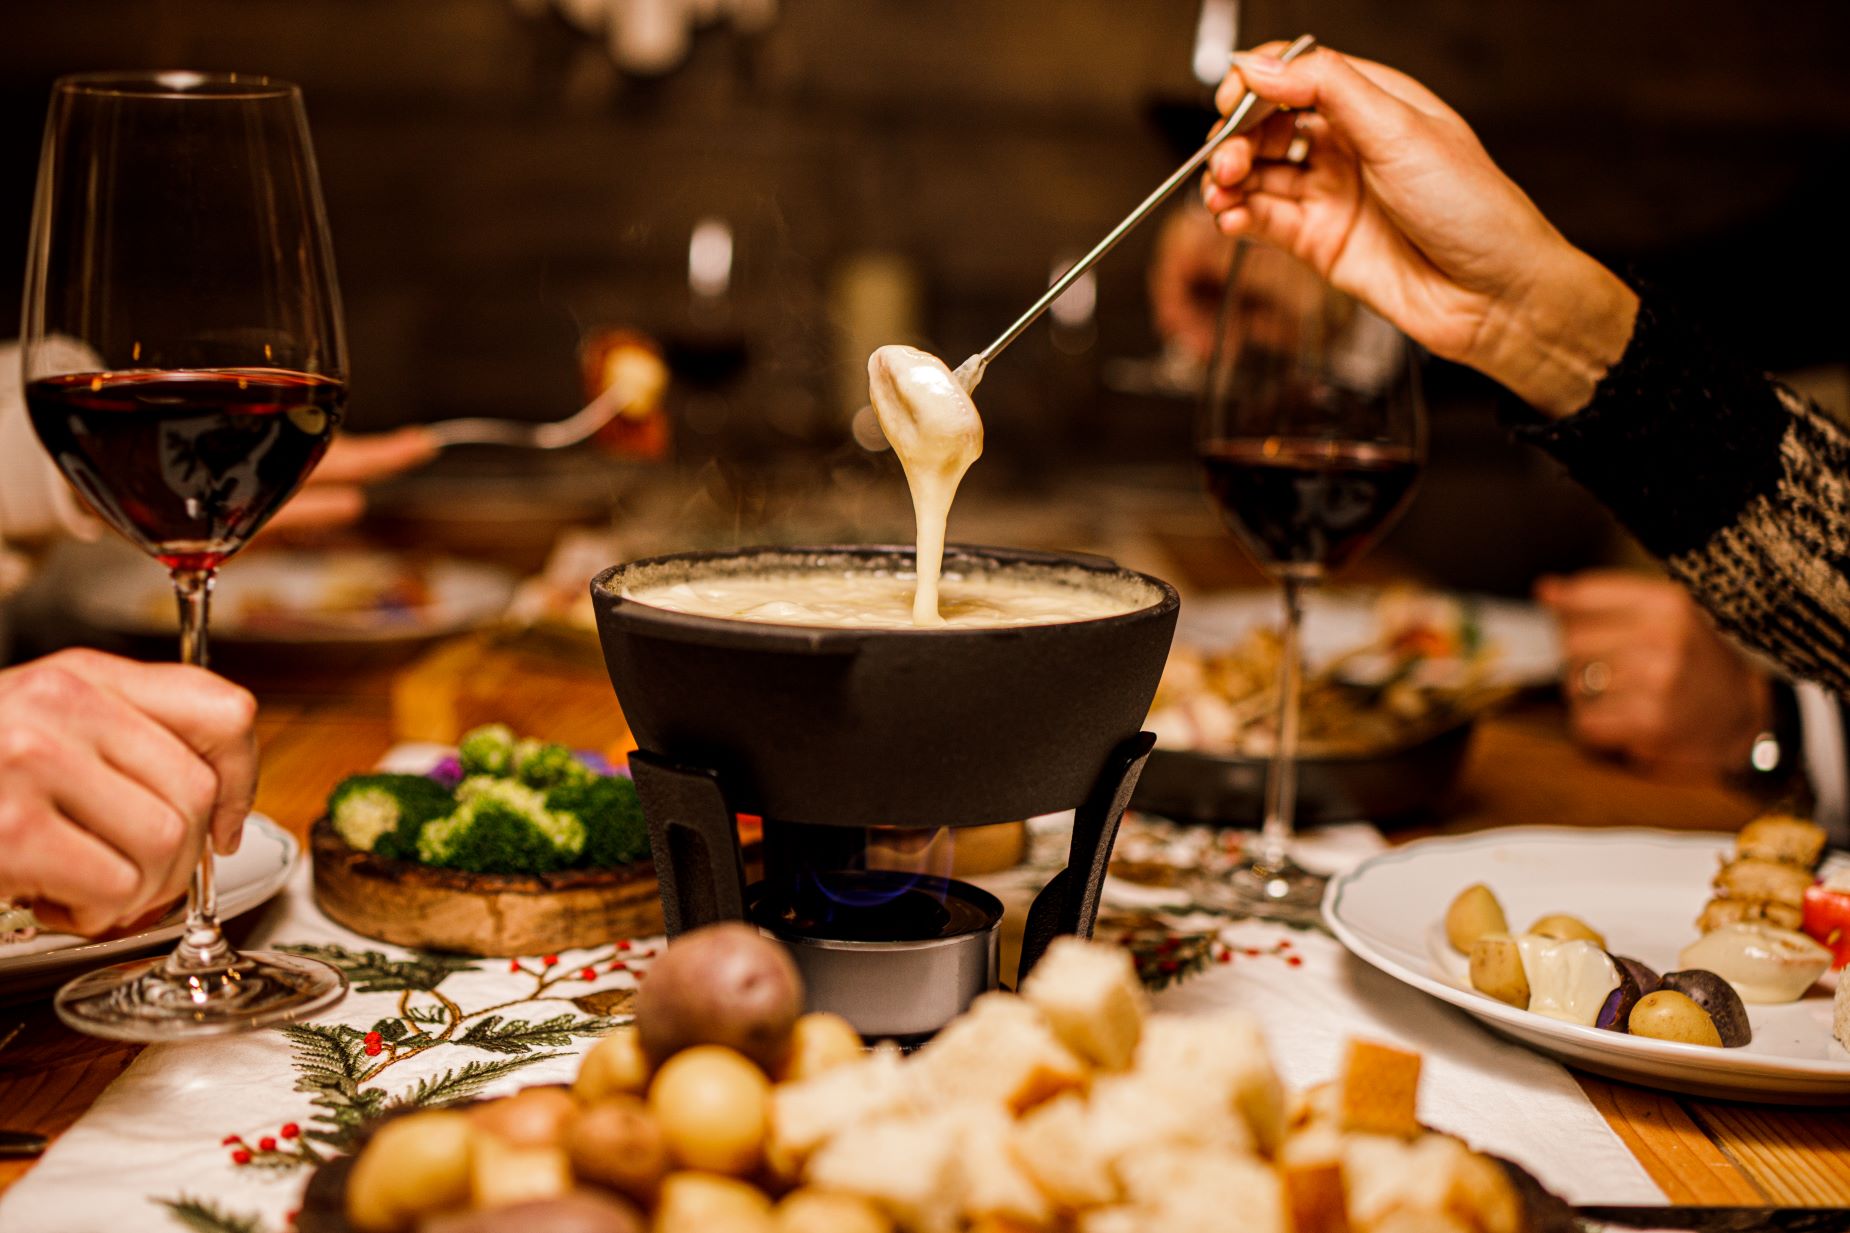 An image of the Apres-Ski Dining Experience fondue set.